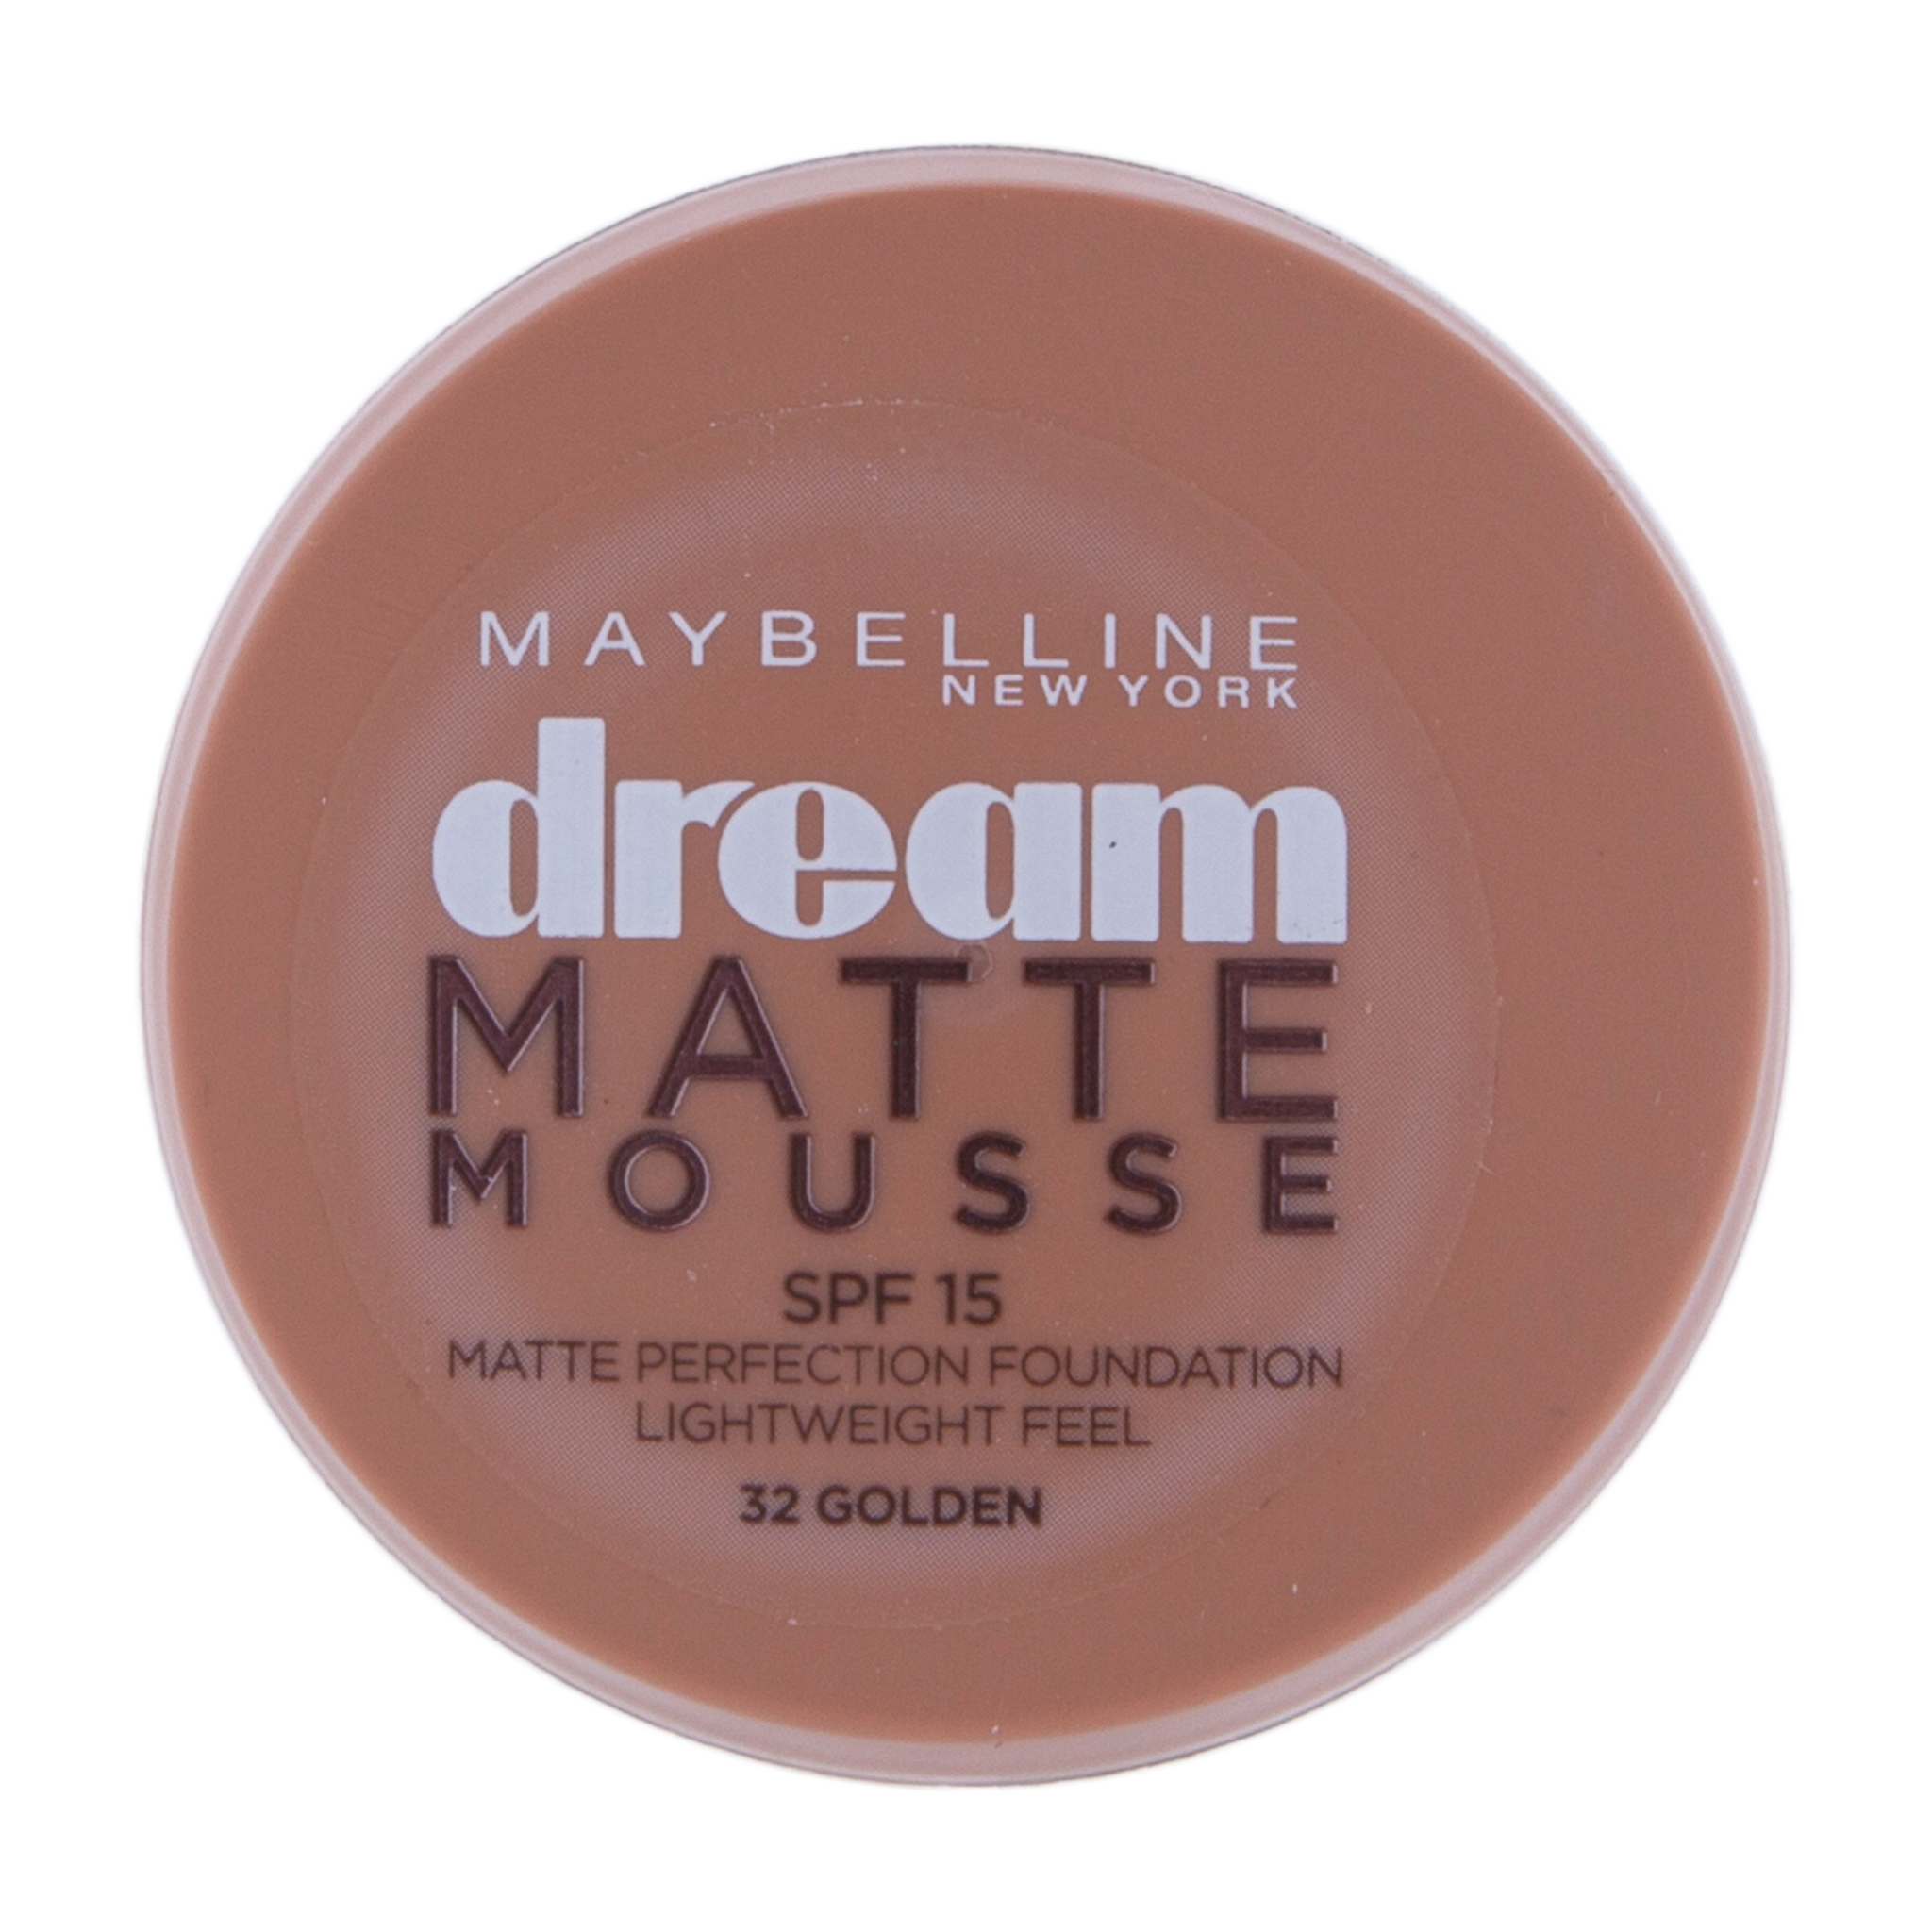 Maybelline Dream Matte Mousse - 32 Golden - Foundation